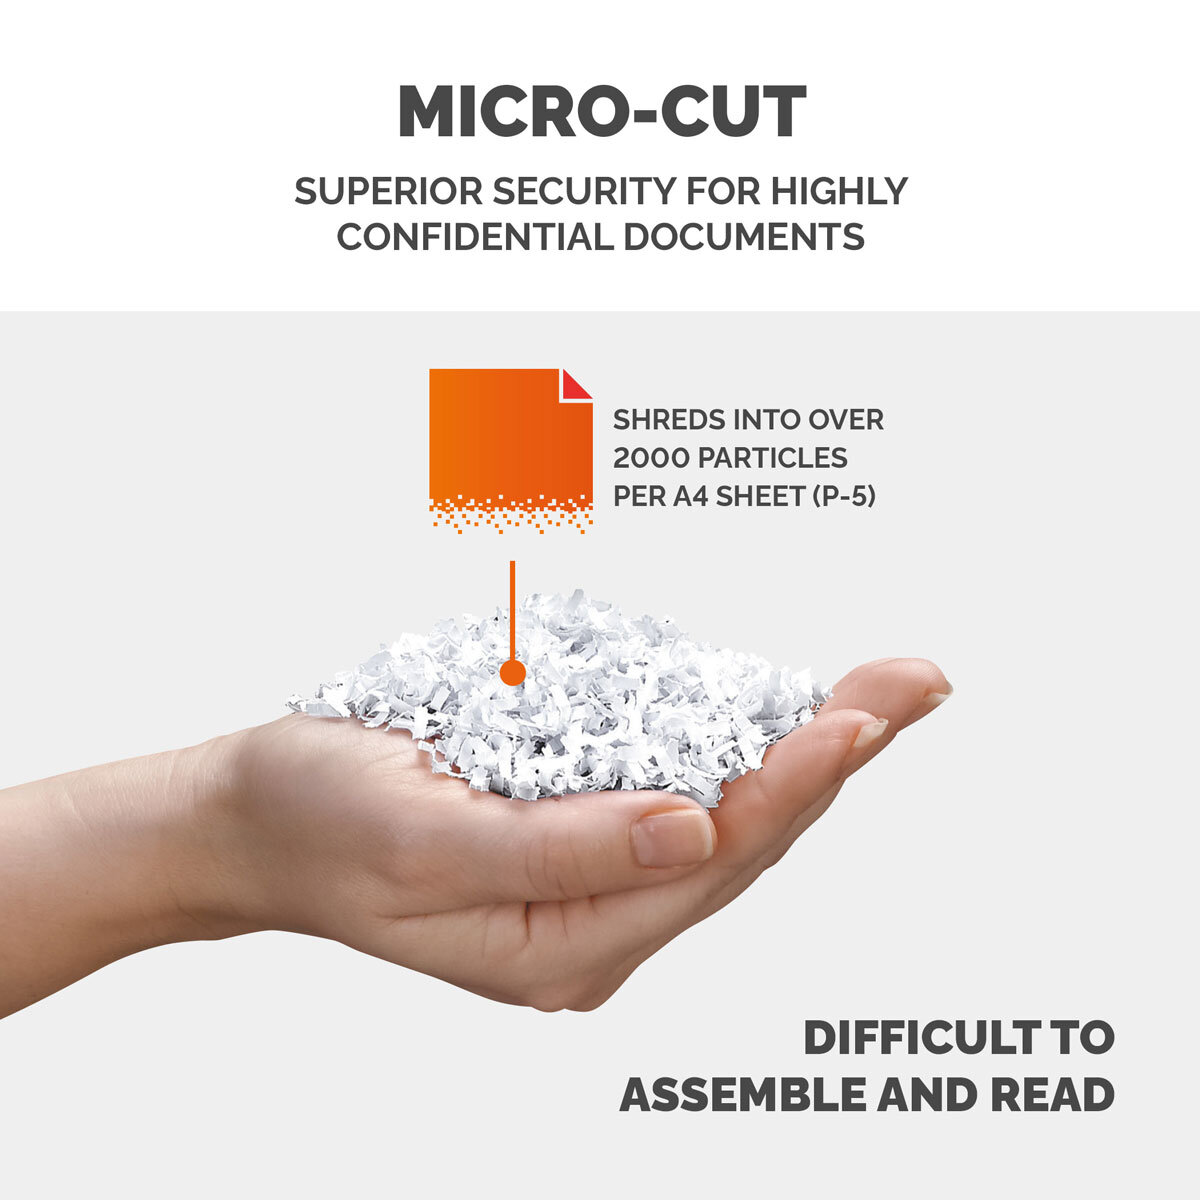 Fellowes Powershred 450M Micro Cut Shredder 9 Sheet Infographic Image